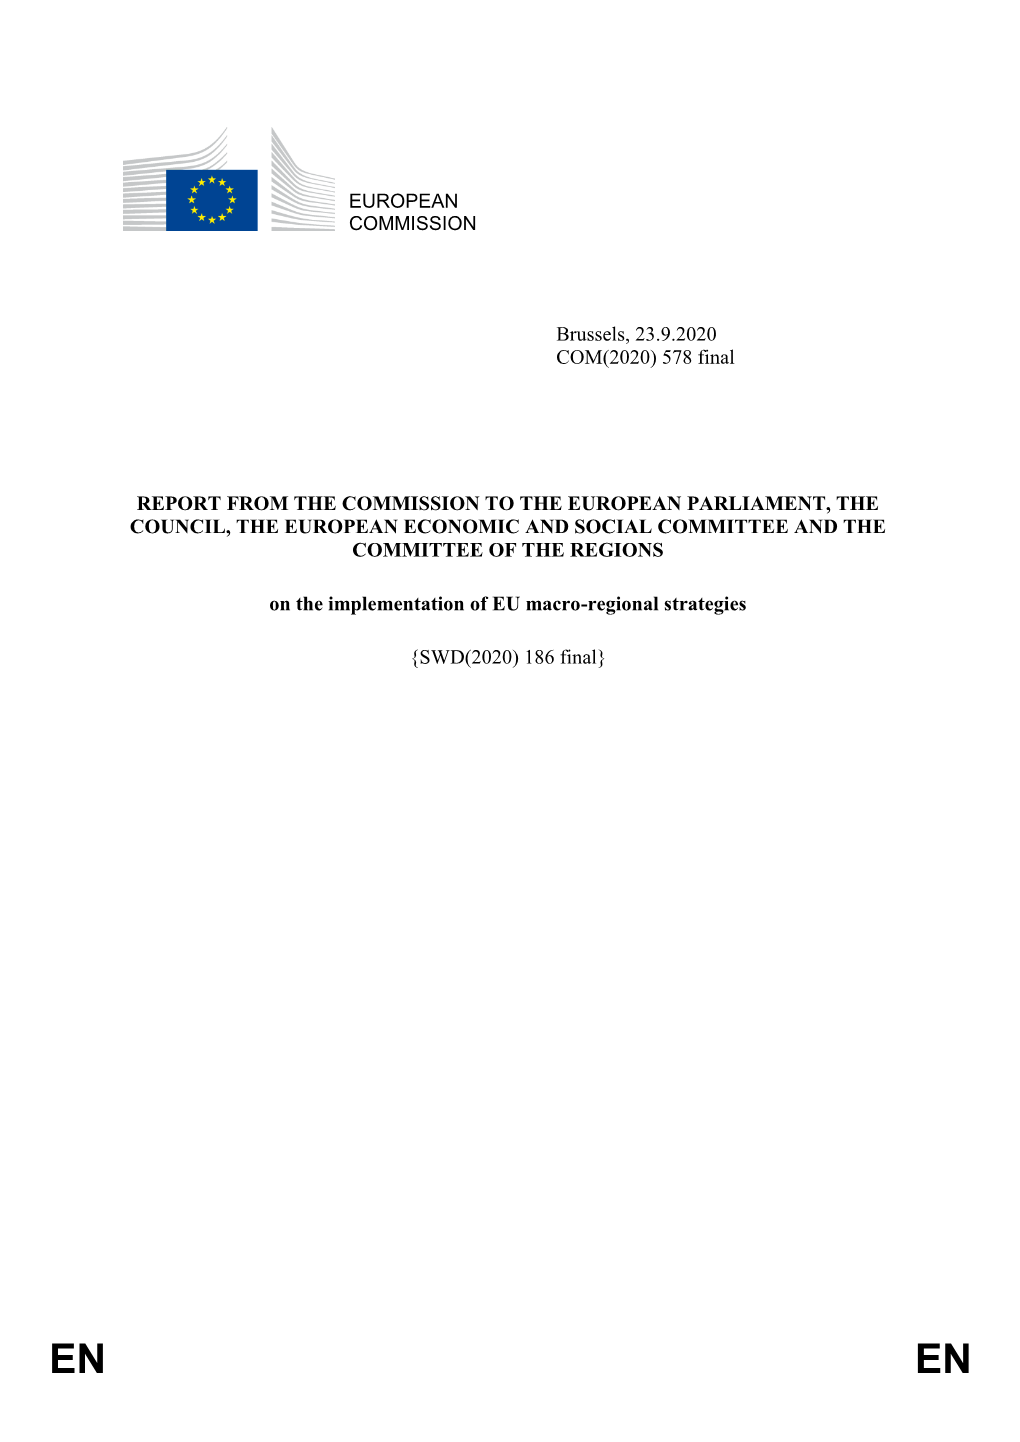 EUROPEAN COMMISSION Brussels, 23.9.2020 COM(2020)